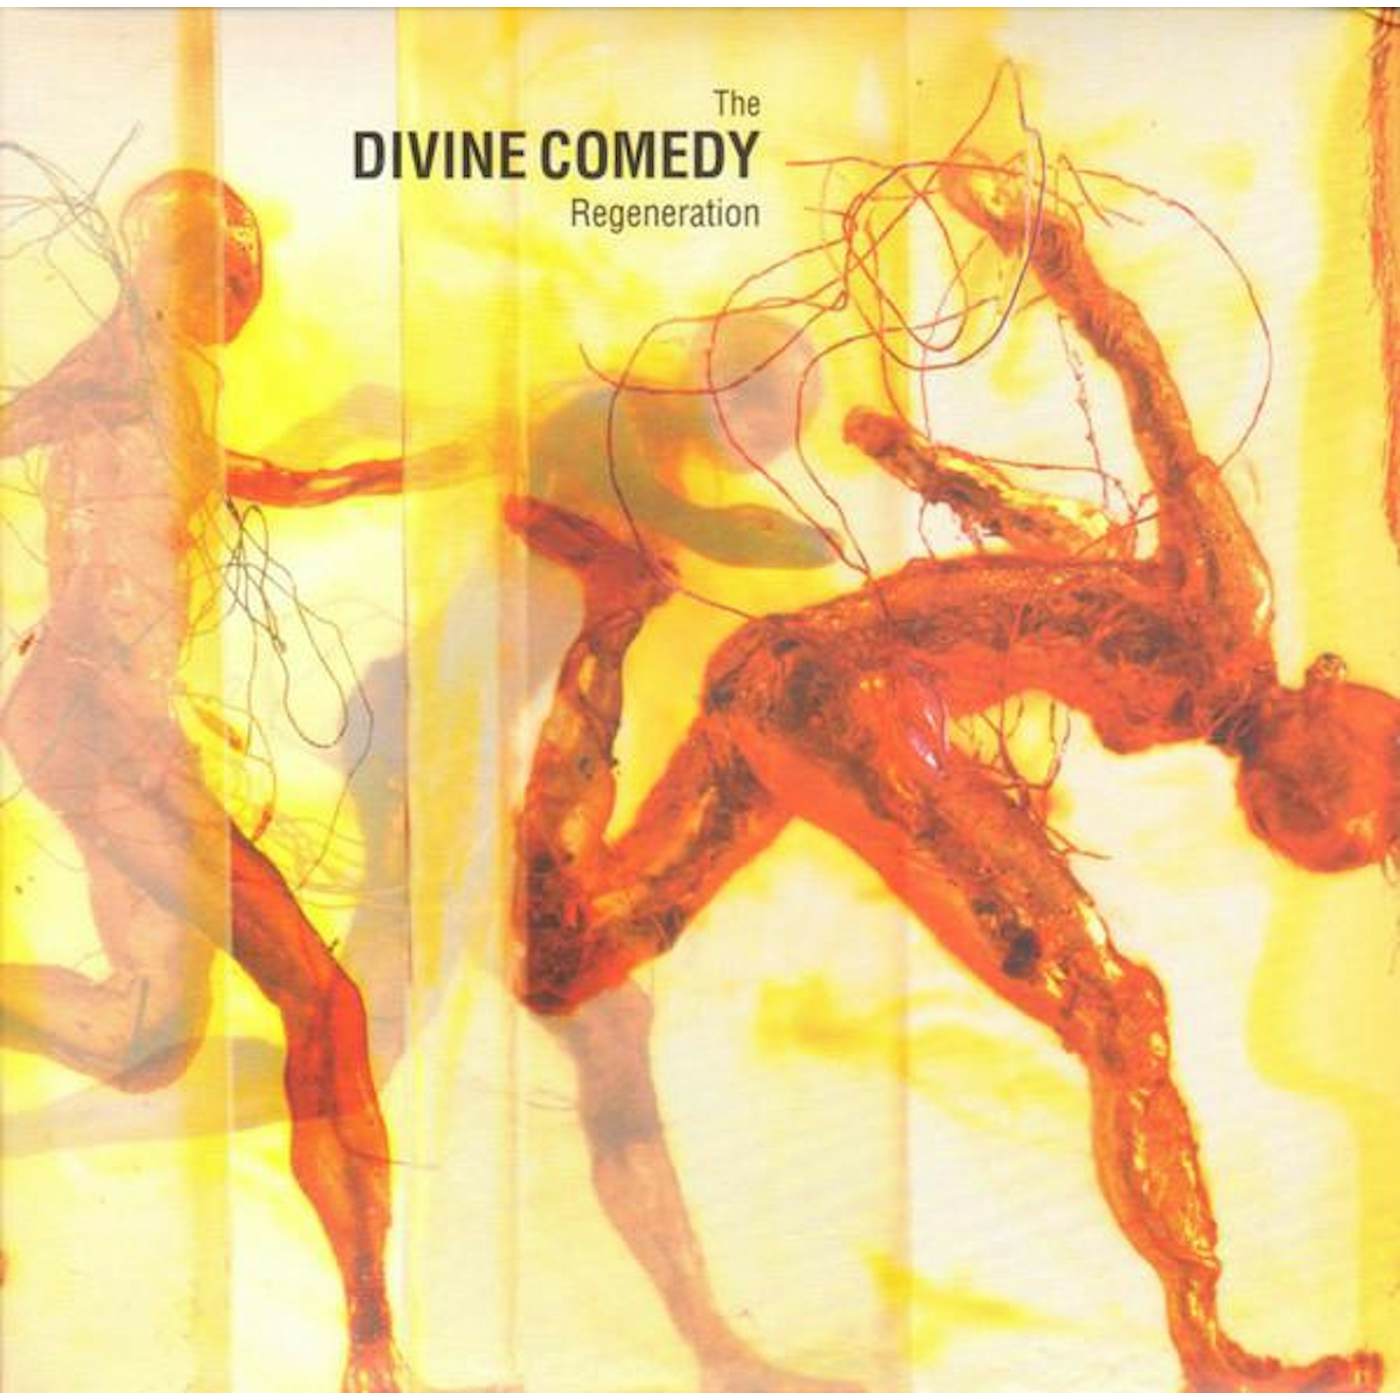 The Divine Comedy REGENERATION CD